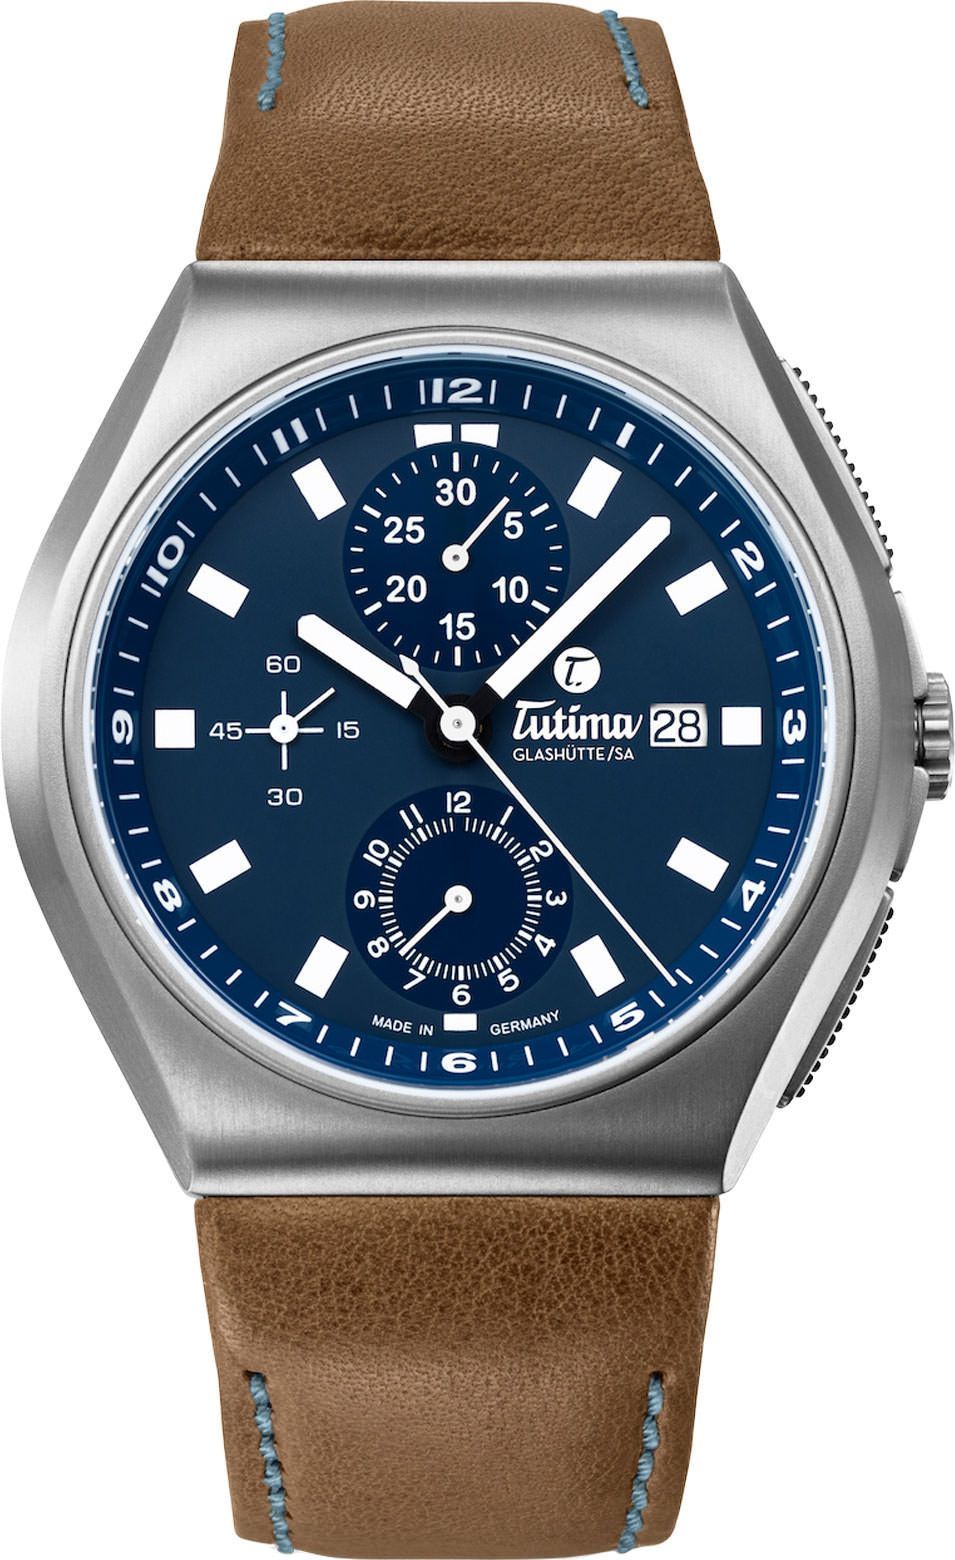 Tutima Glashütte Coastline 43 mm Watch in Blue Dial For Men - 1